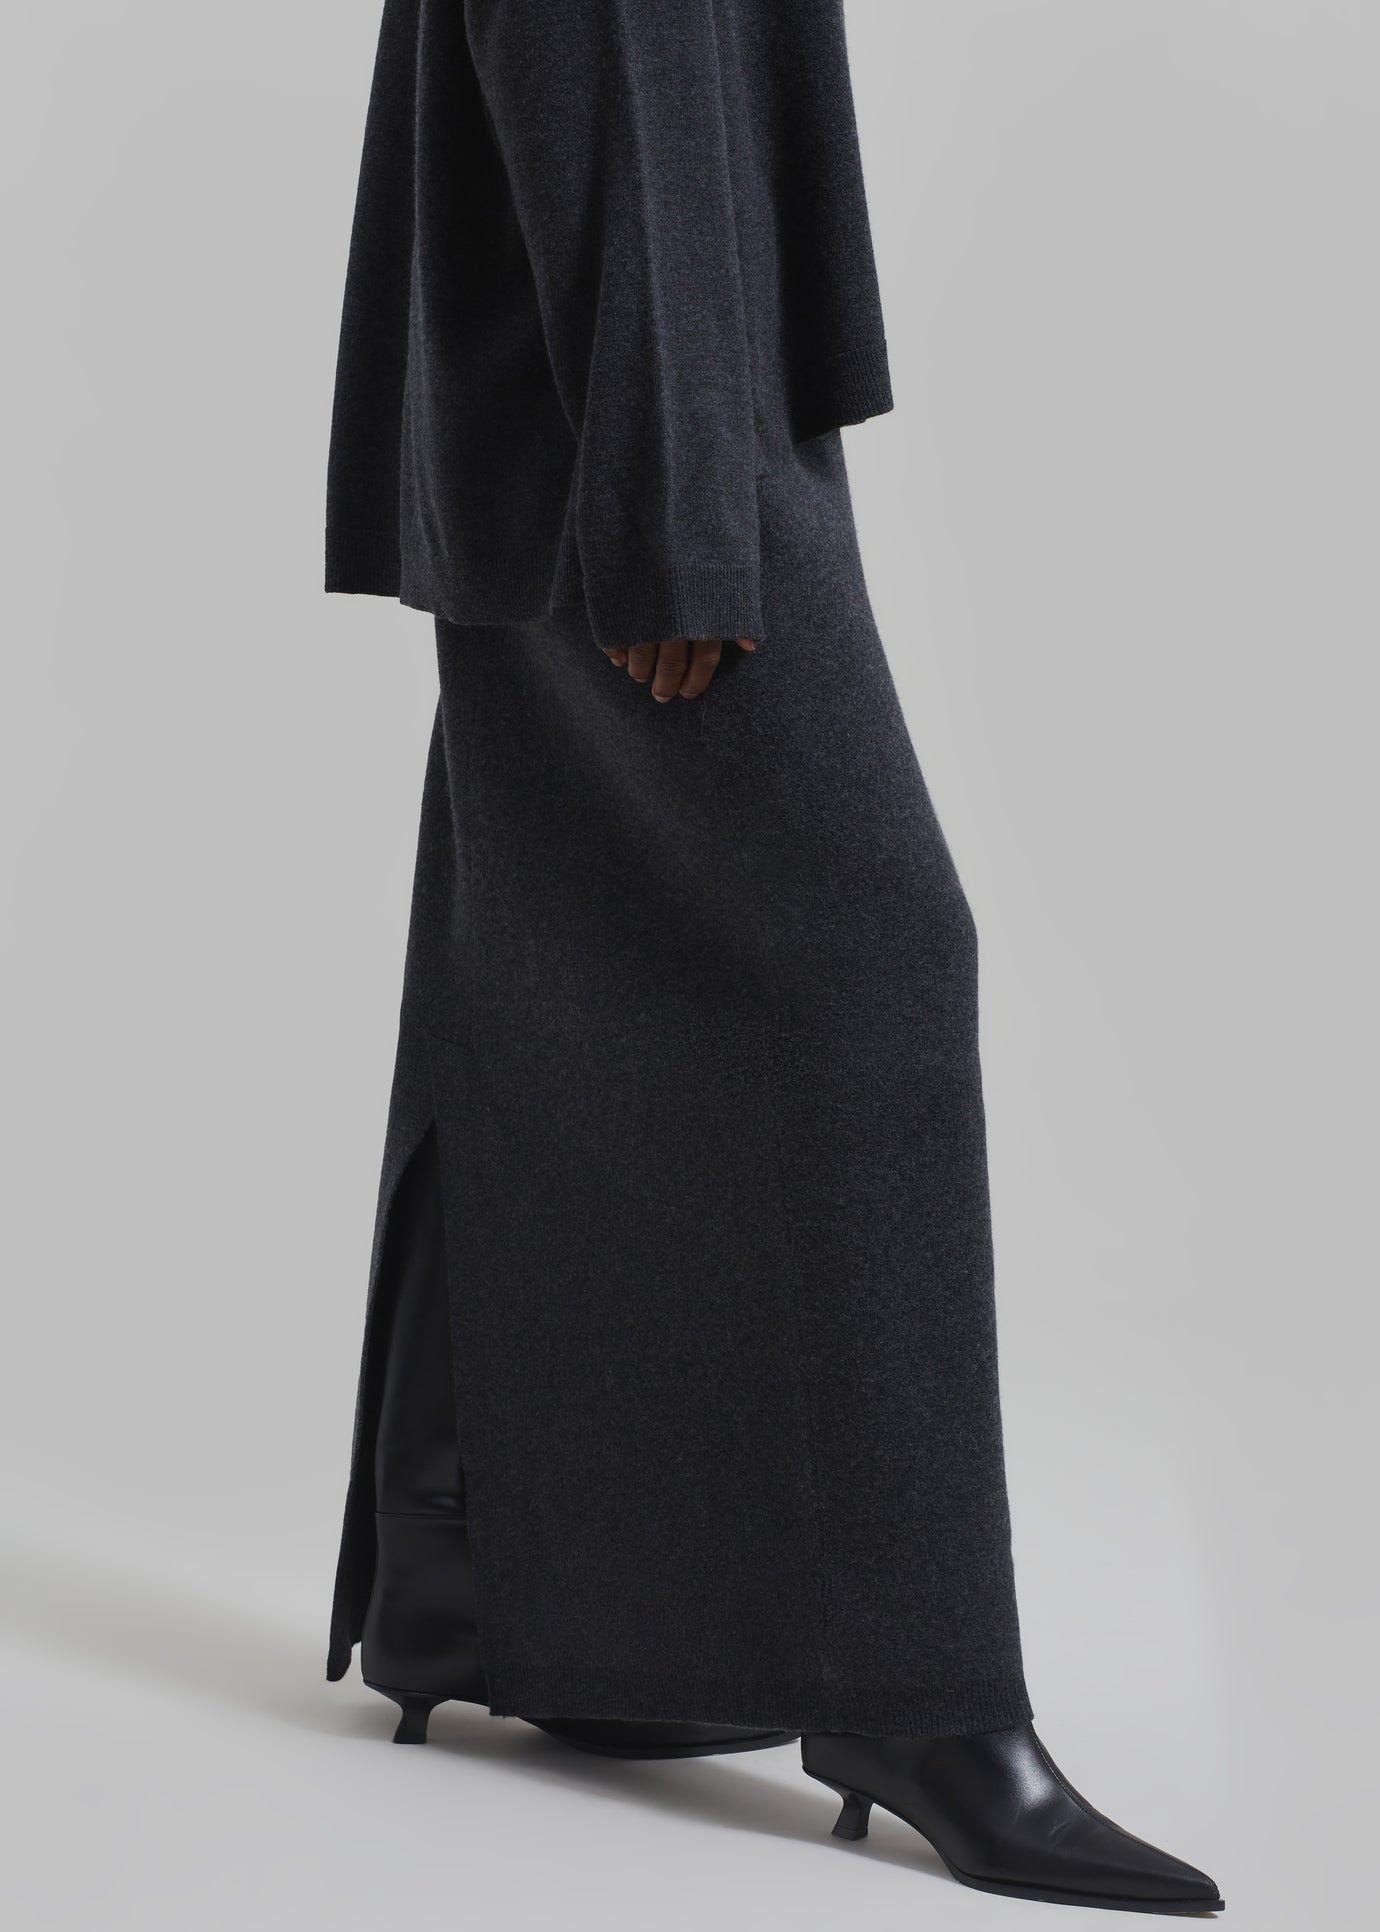 Bellamy Wool Skirt - Charcoal - 1